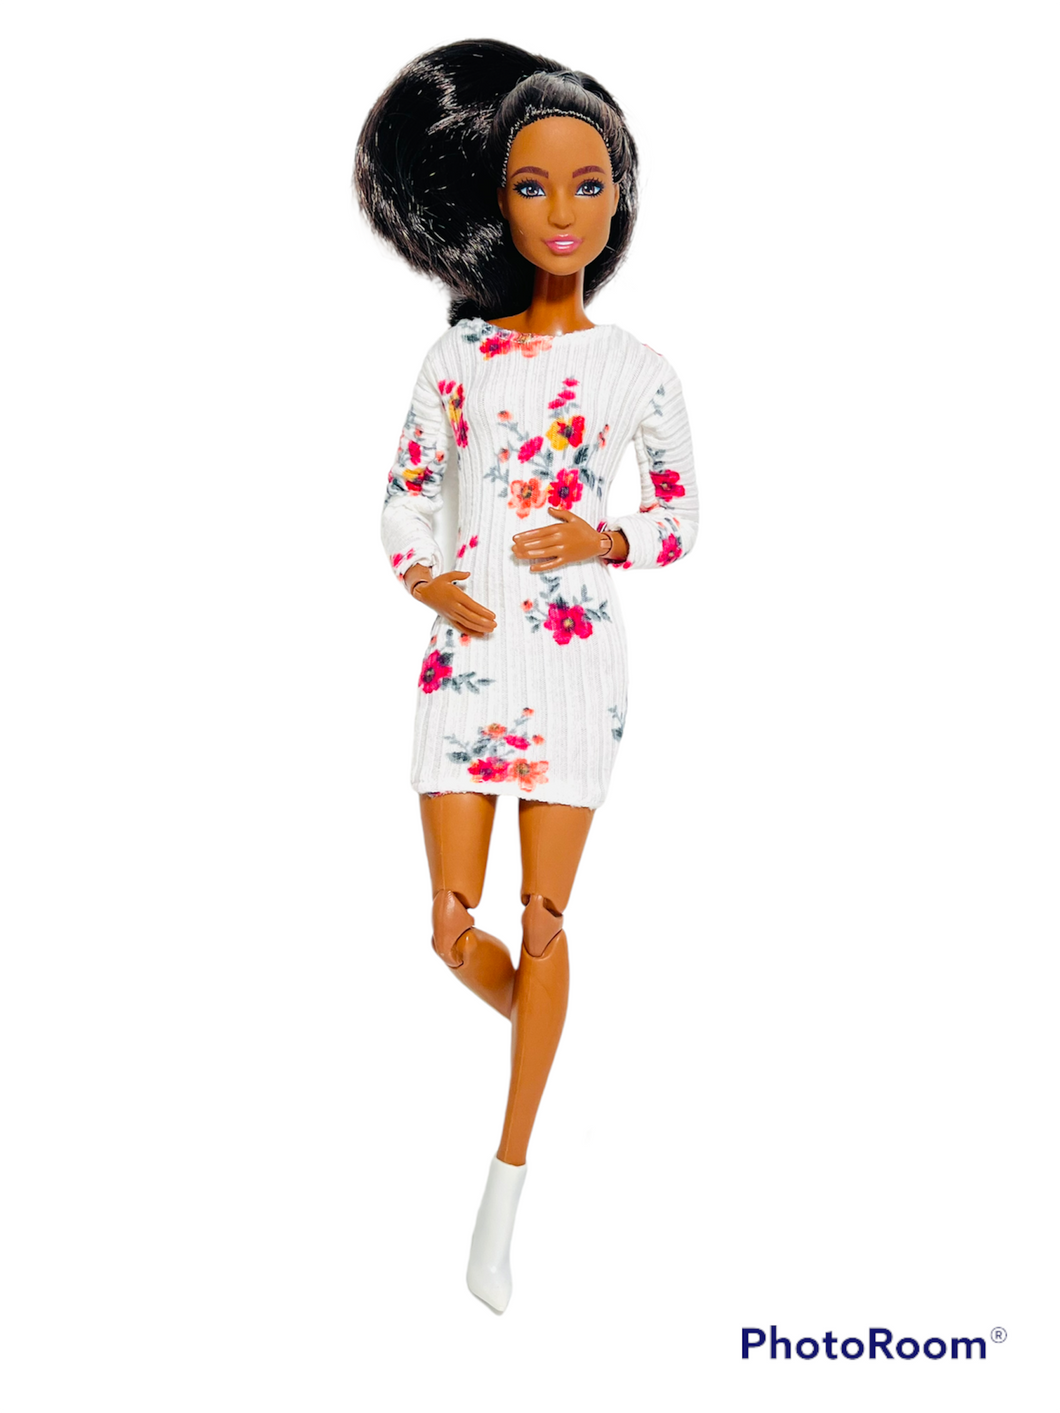 Floral dress for Barbie doll